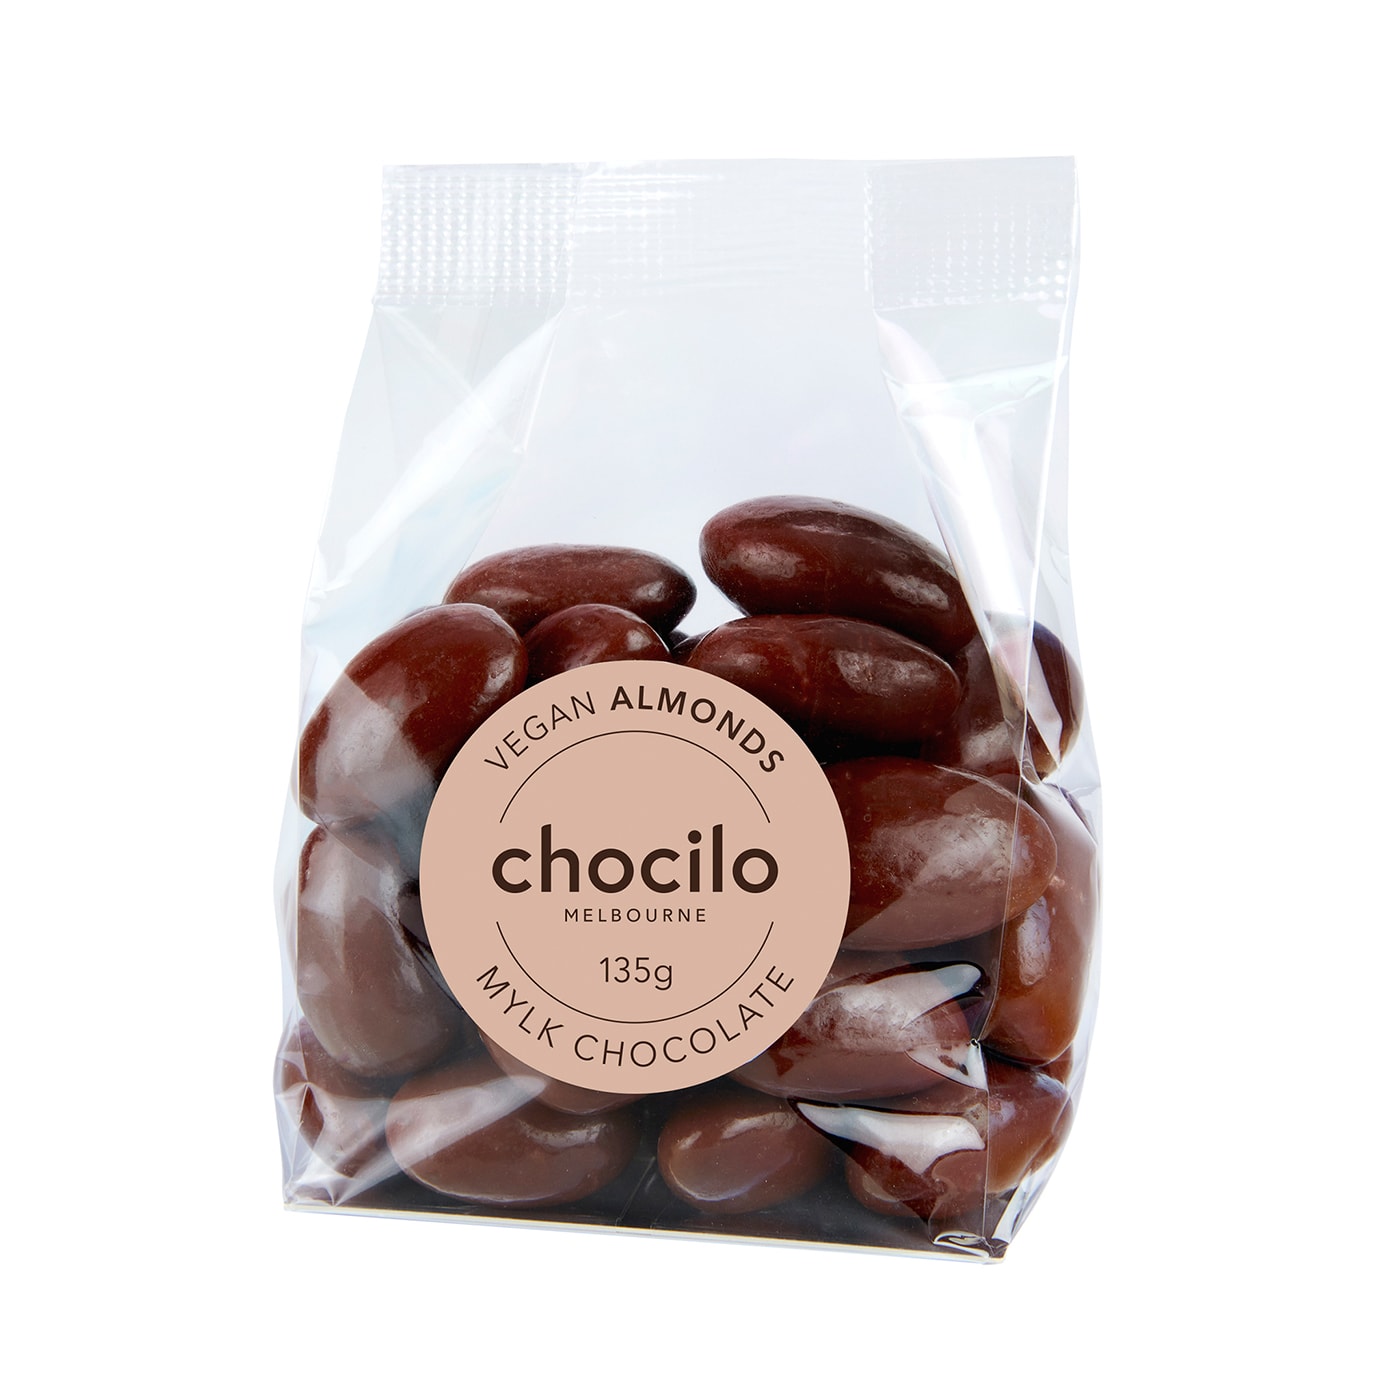 Vegan Almonds in Mylk Chocolate Gift Bag - 135g